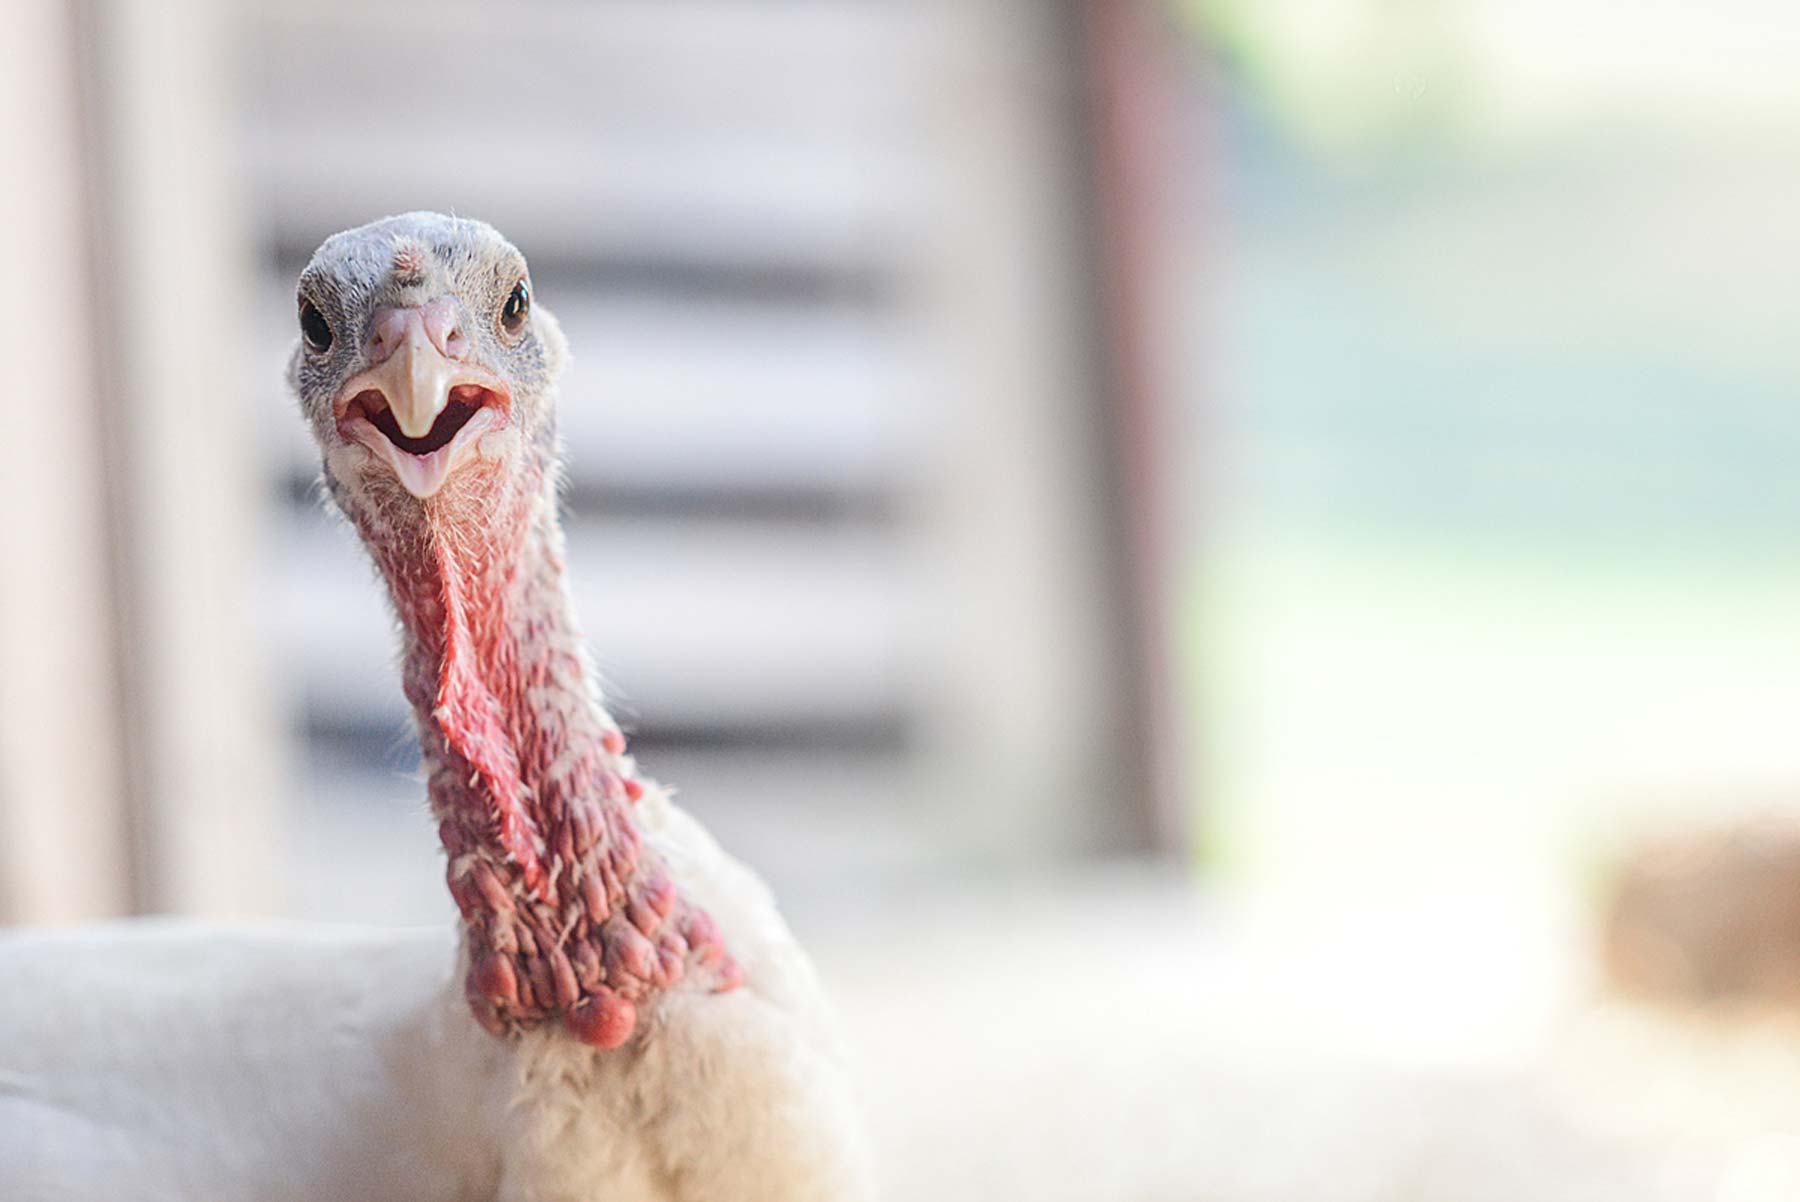 Rescued turkey resident at Farm Sanctuary